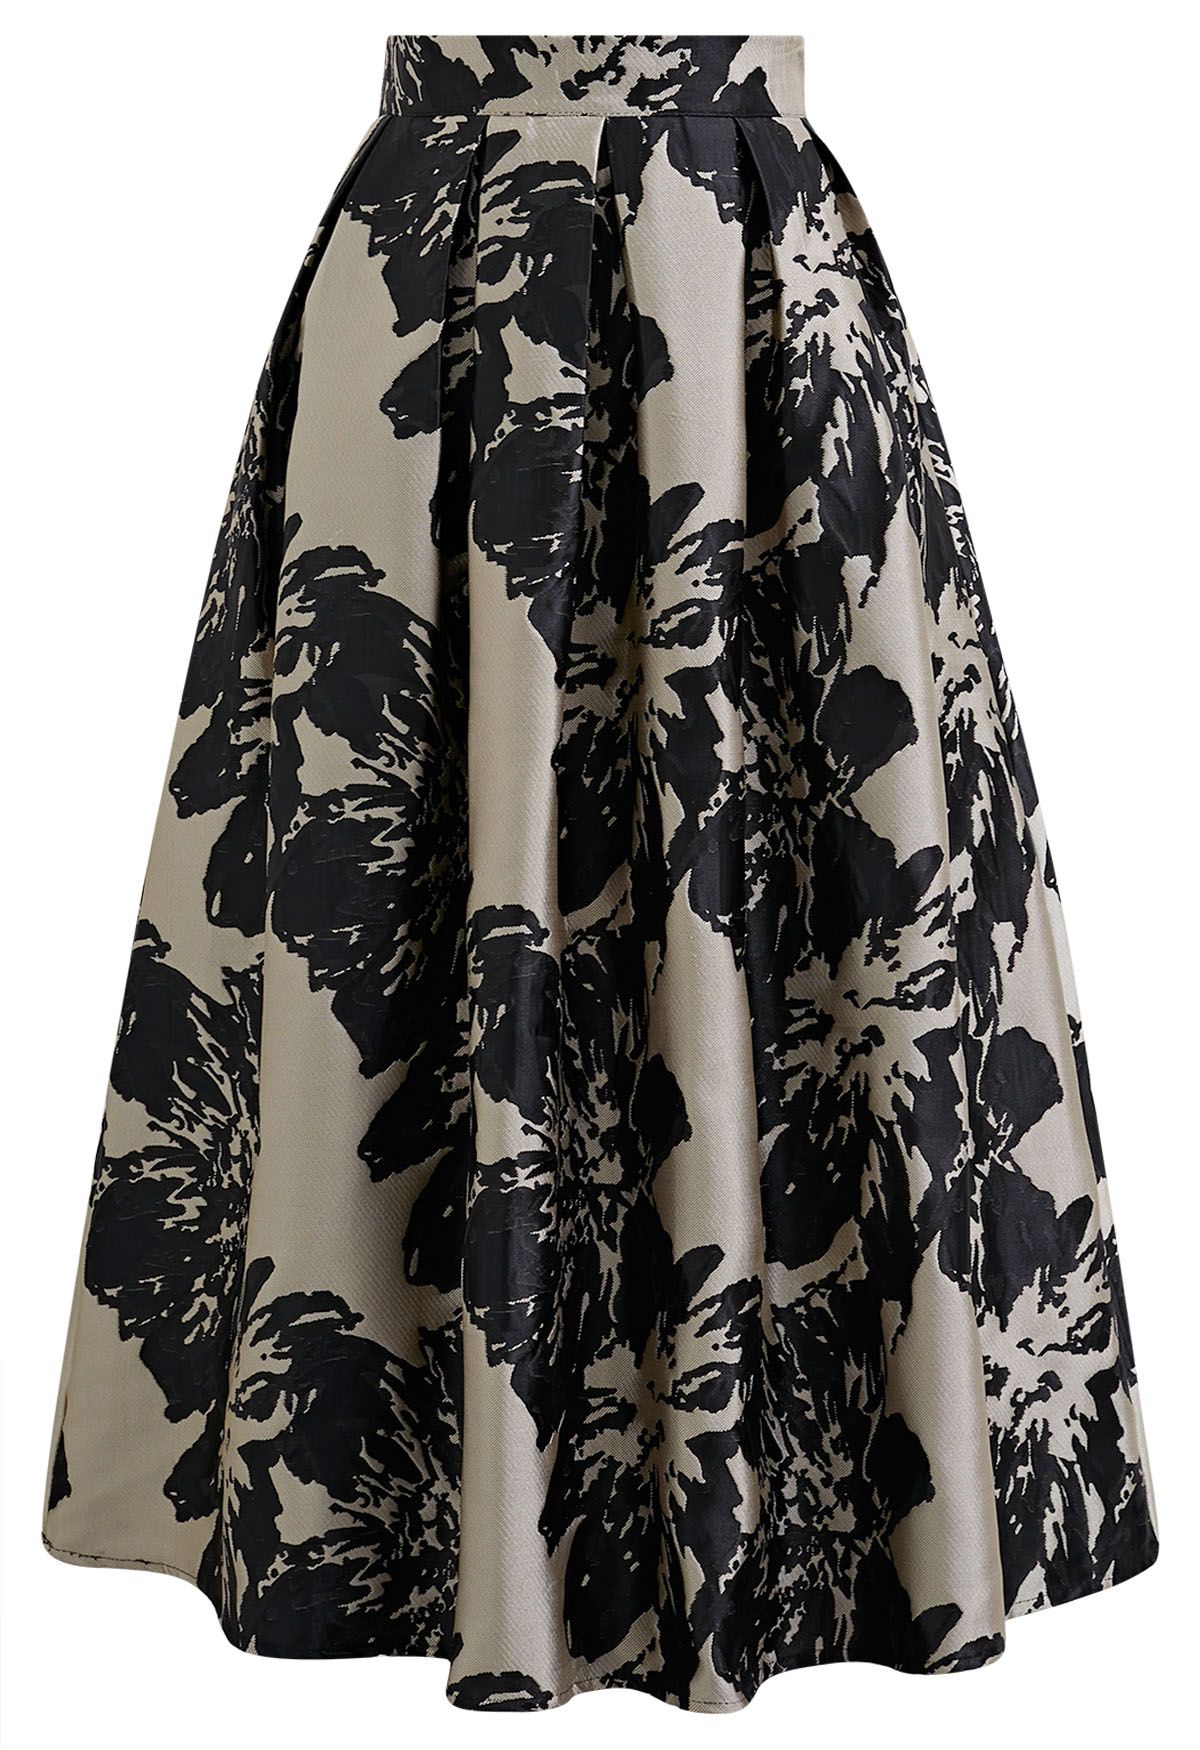 Llamativa falda midi plisada de jacquard floral